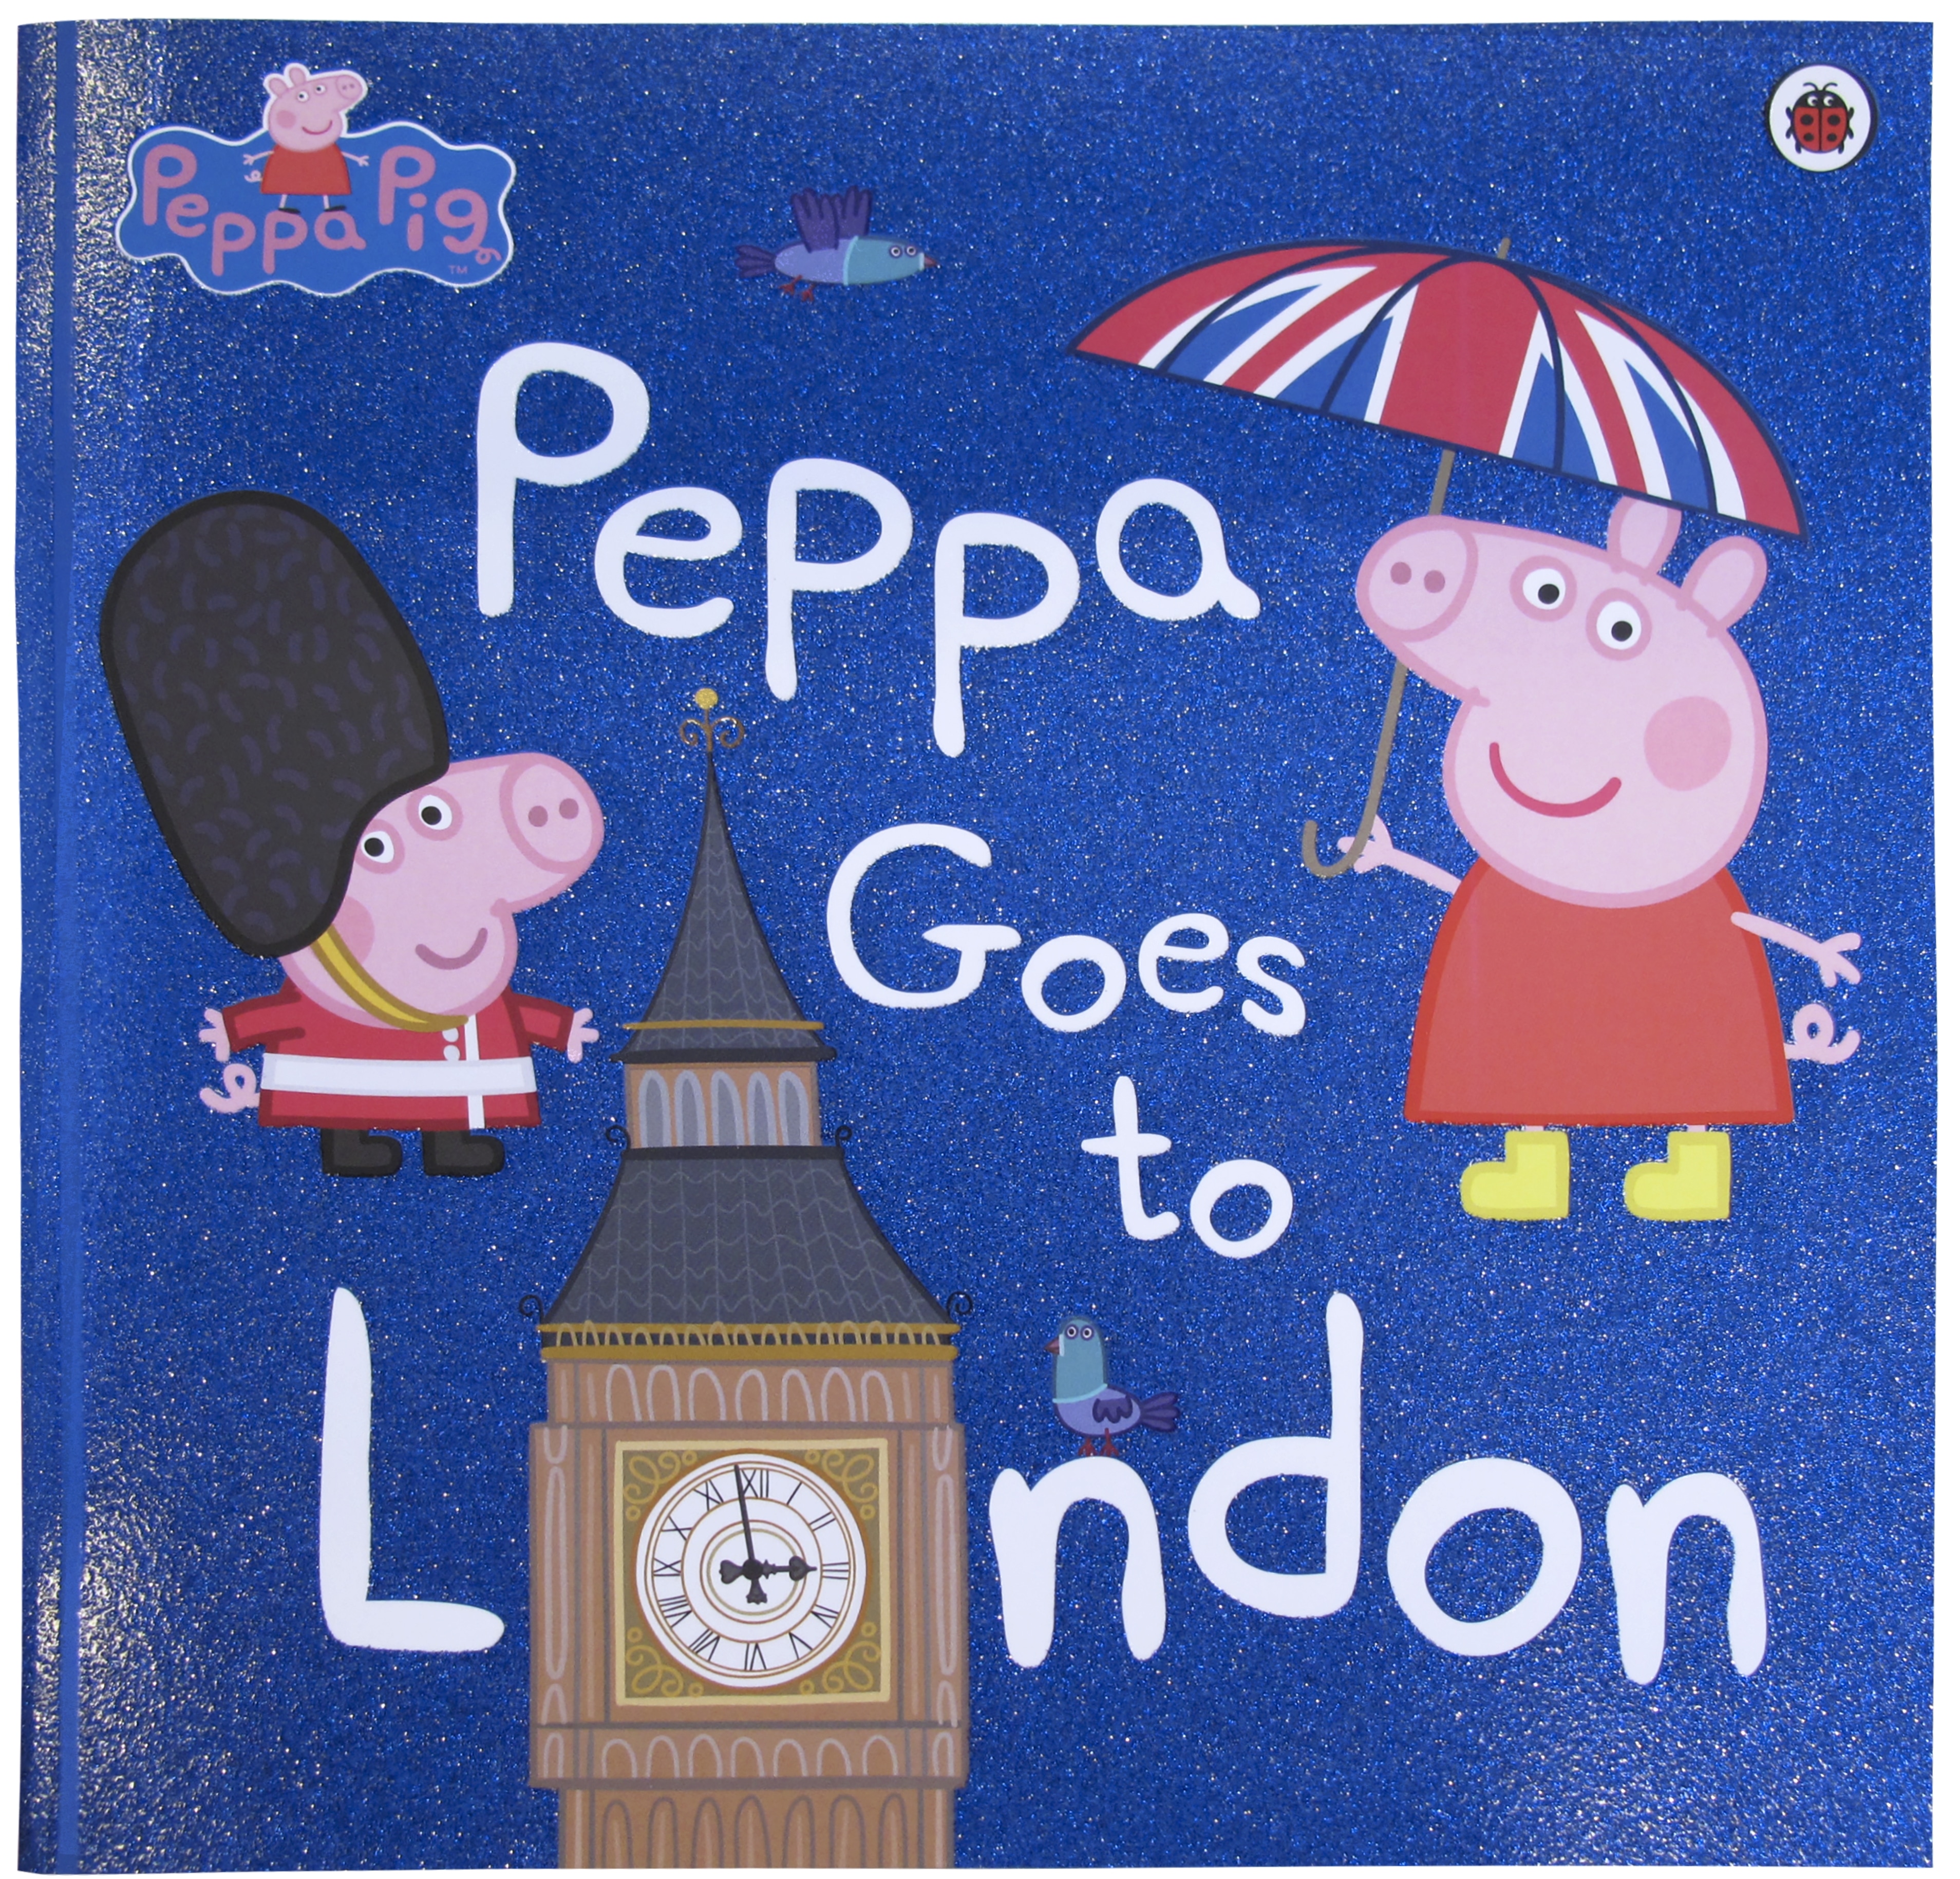 Book “Peppa Pig: Peppa Goes to London” by Peppa Pig — April 6, 2017